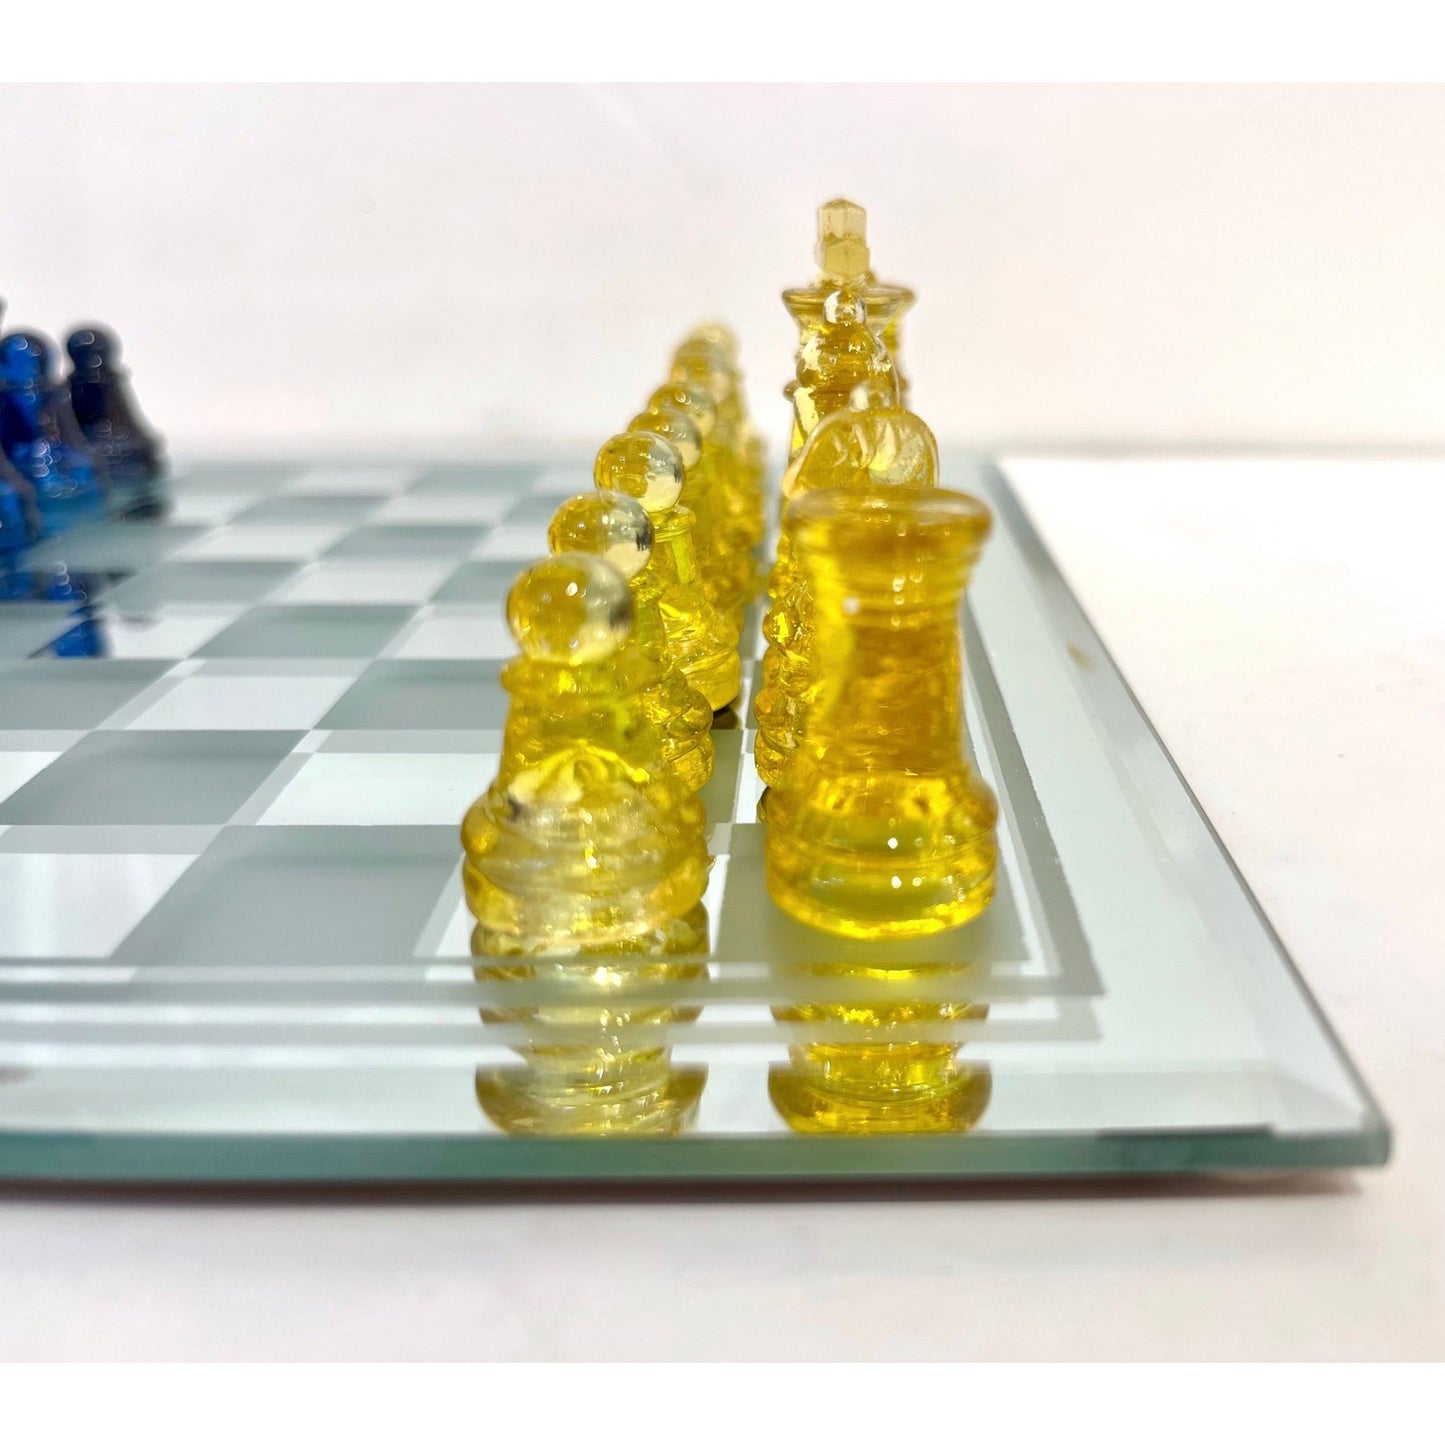 Contemporary Minimalist Blue & Yellow Murano Glass Chess Set on Mirrored Board